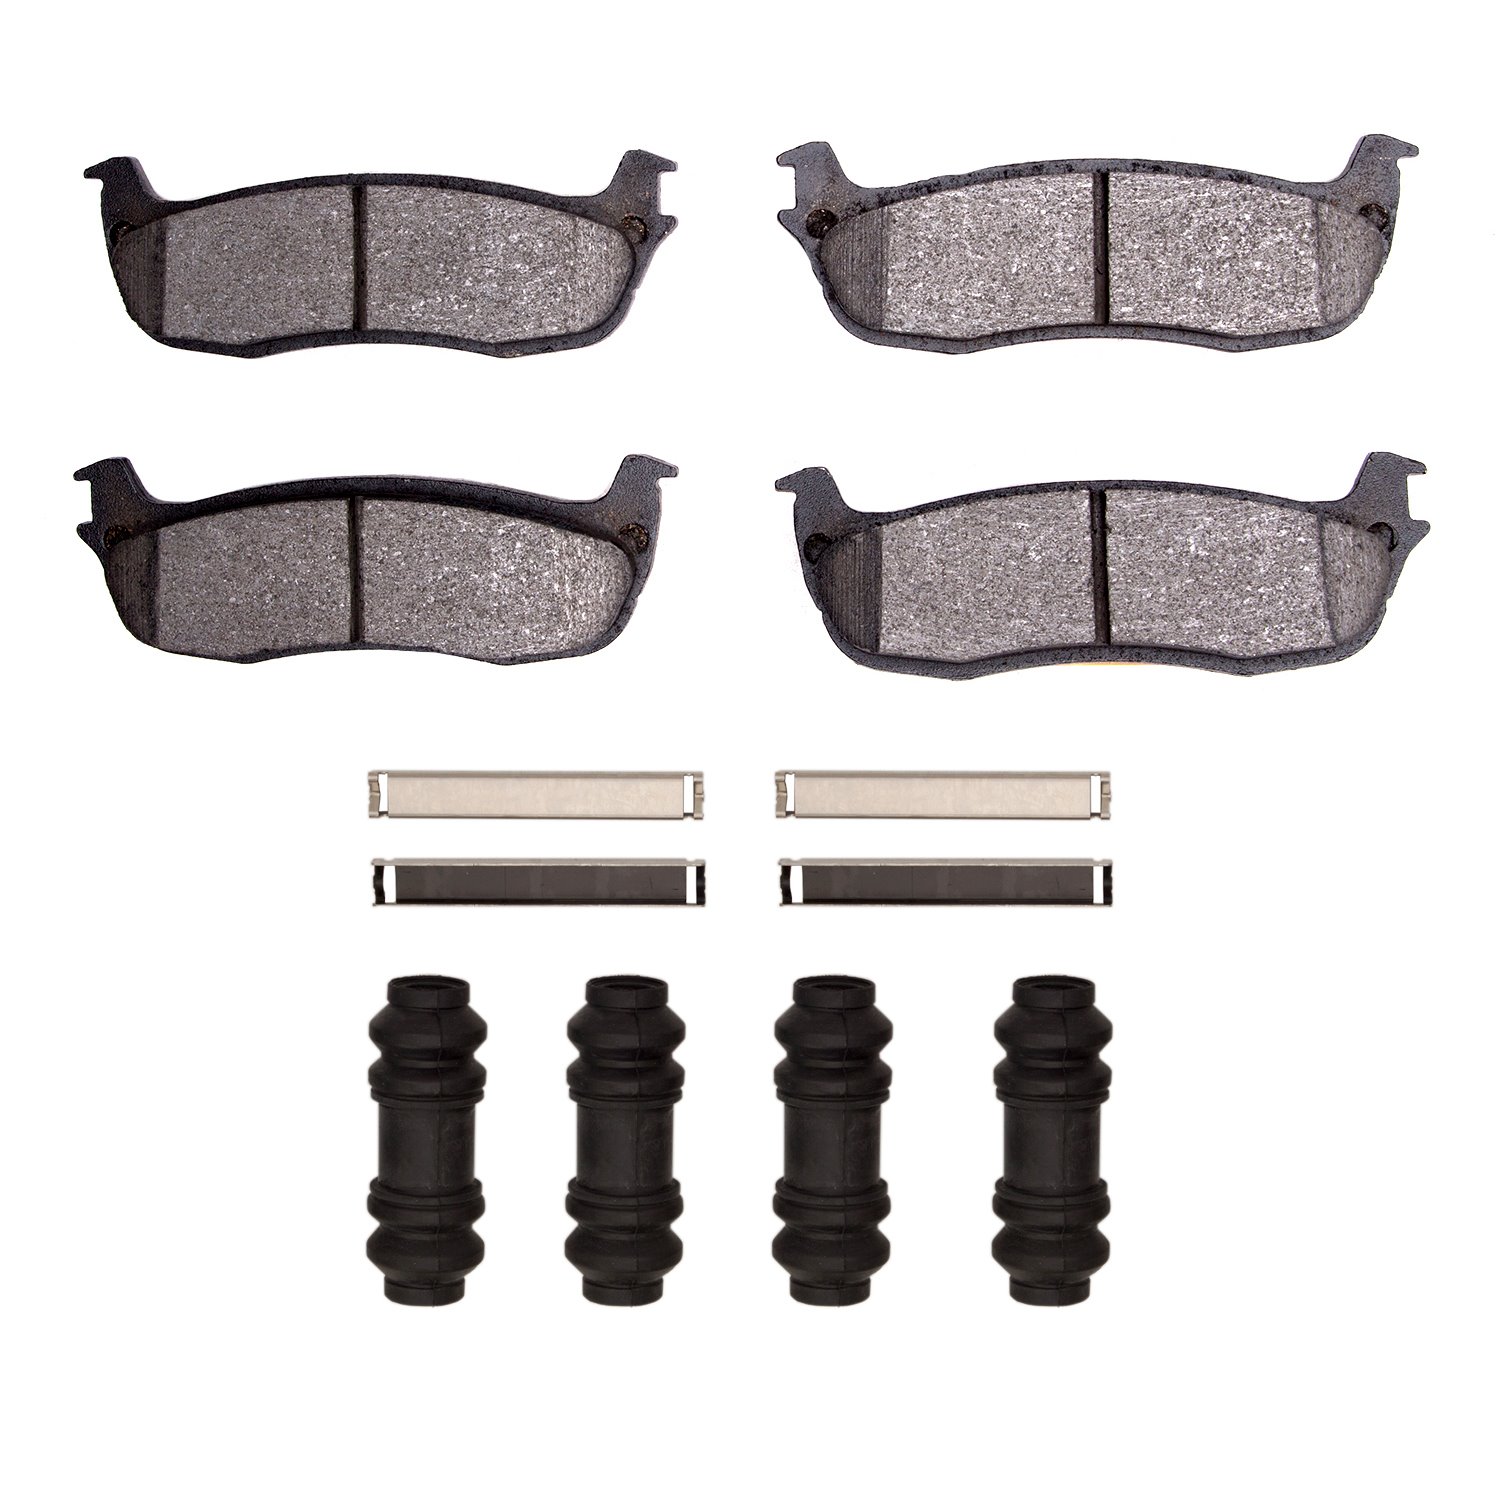 1310-0711-01 3000-Series Ceramic Brake Pads & Hardware Kit, 1997-2011 Ford/Lincoln/Mercury/Mazda, Position: Rear